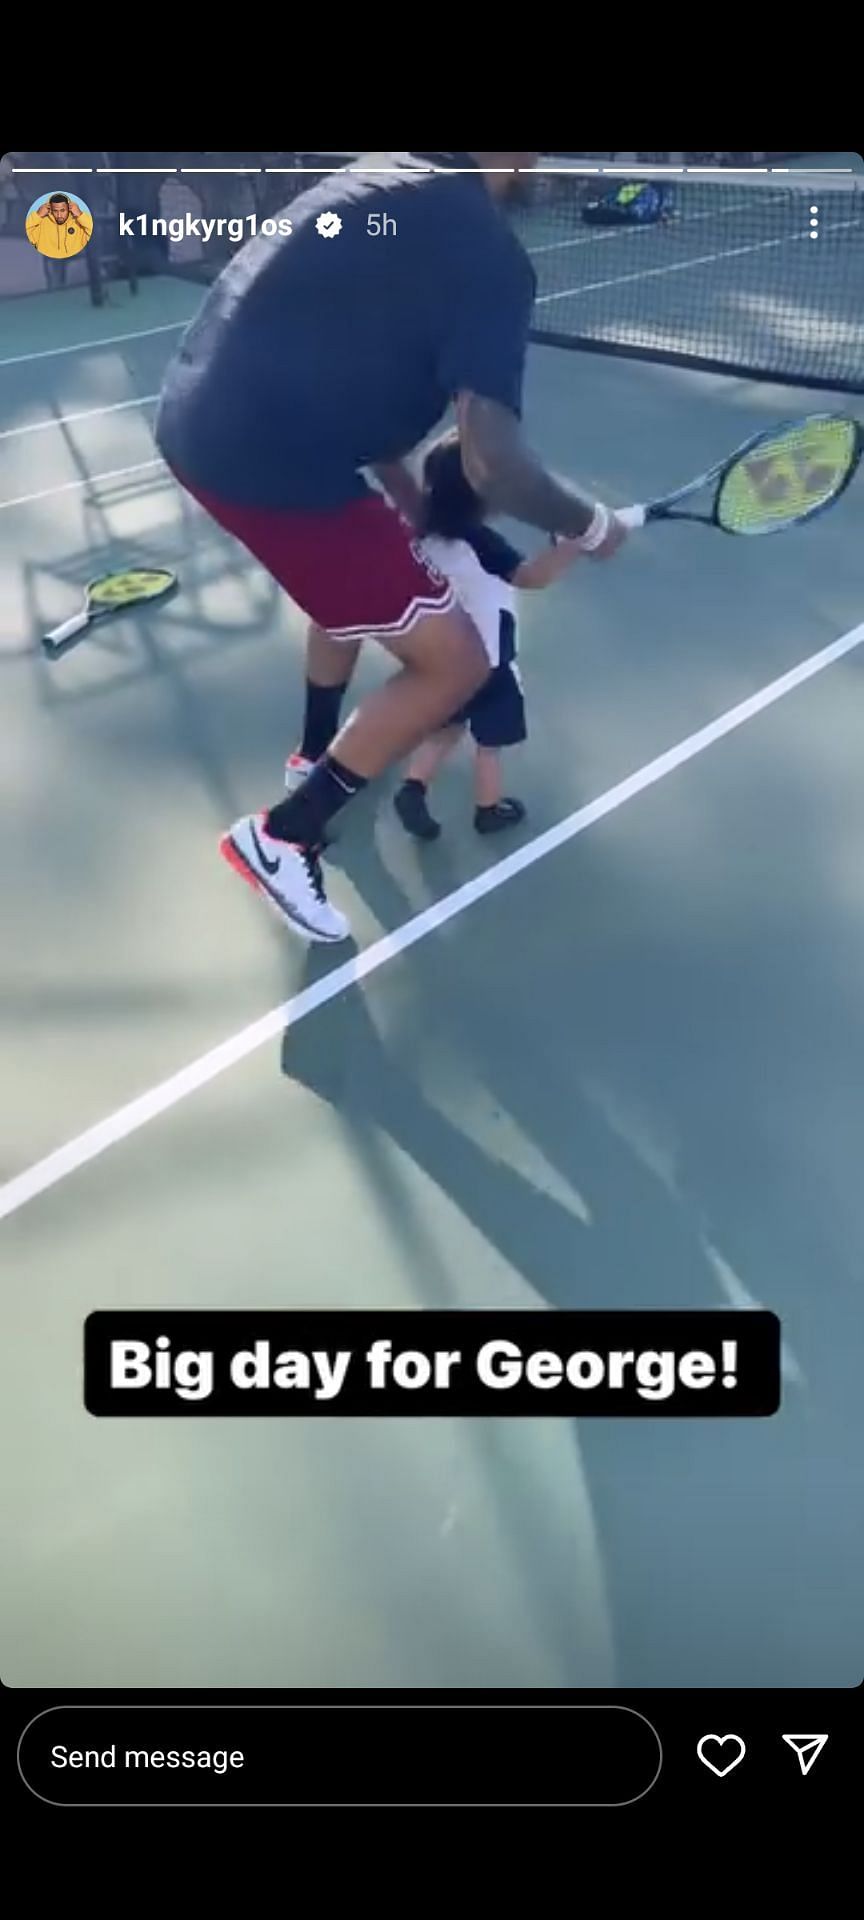 Nick Kyrgios&#039; Instagram post featuring his 1-year-old nephew George playing tennis